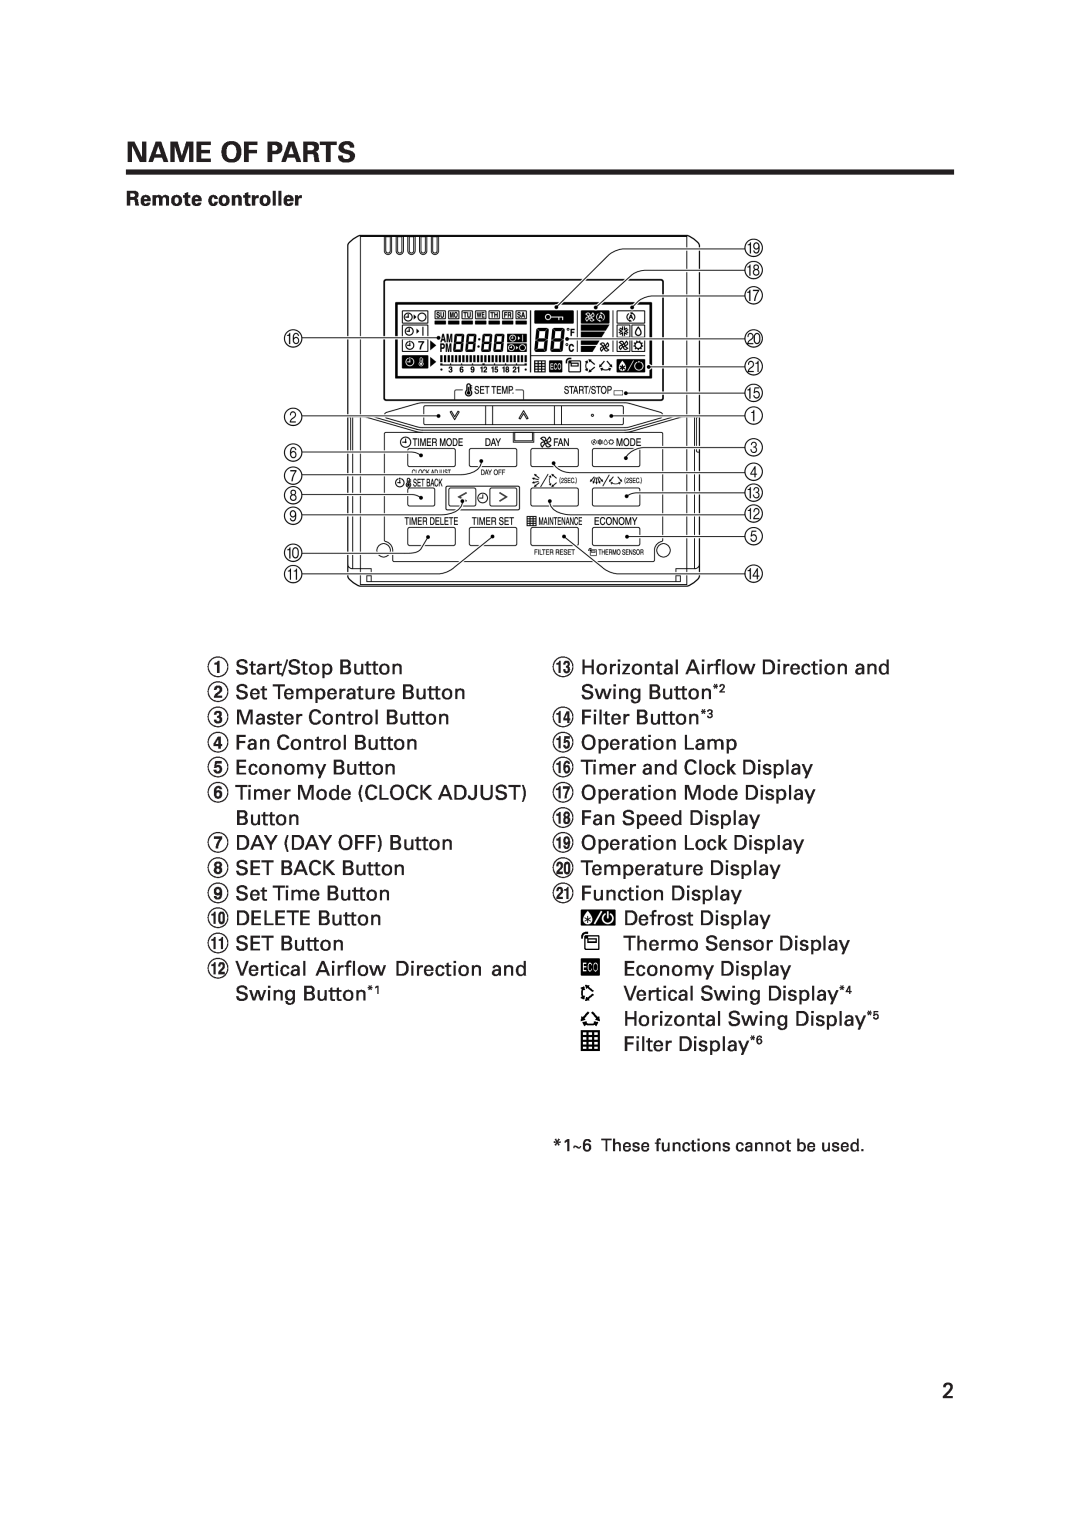 Fujitsu R410A operation manual Name Of Parts, Remote controller 